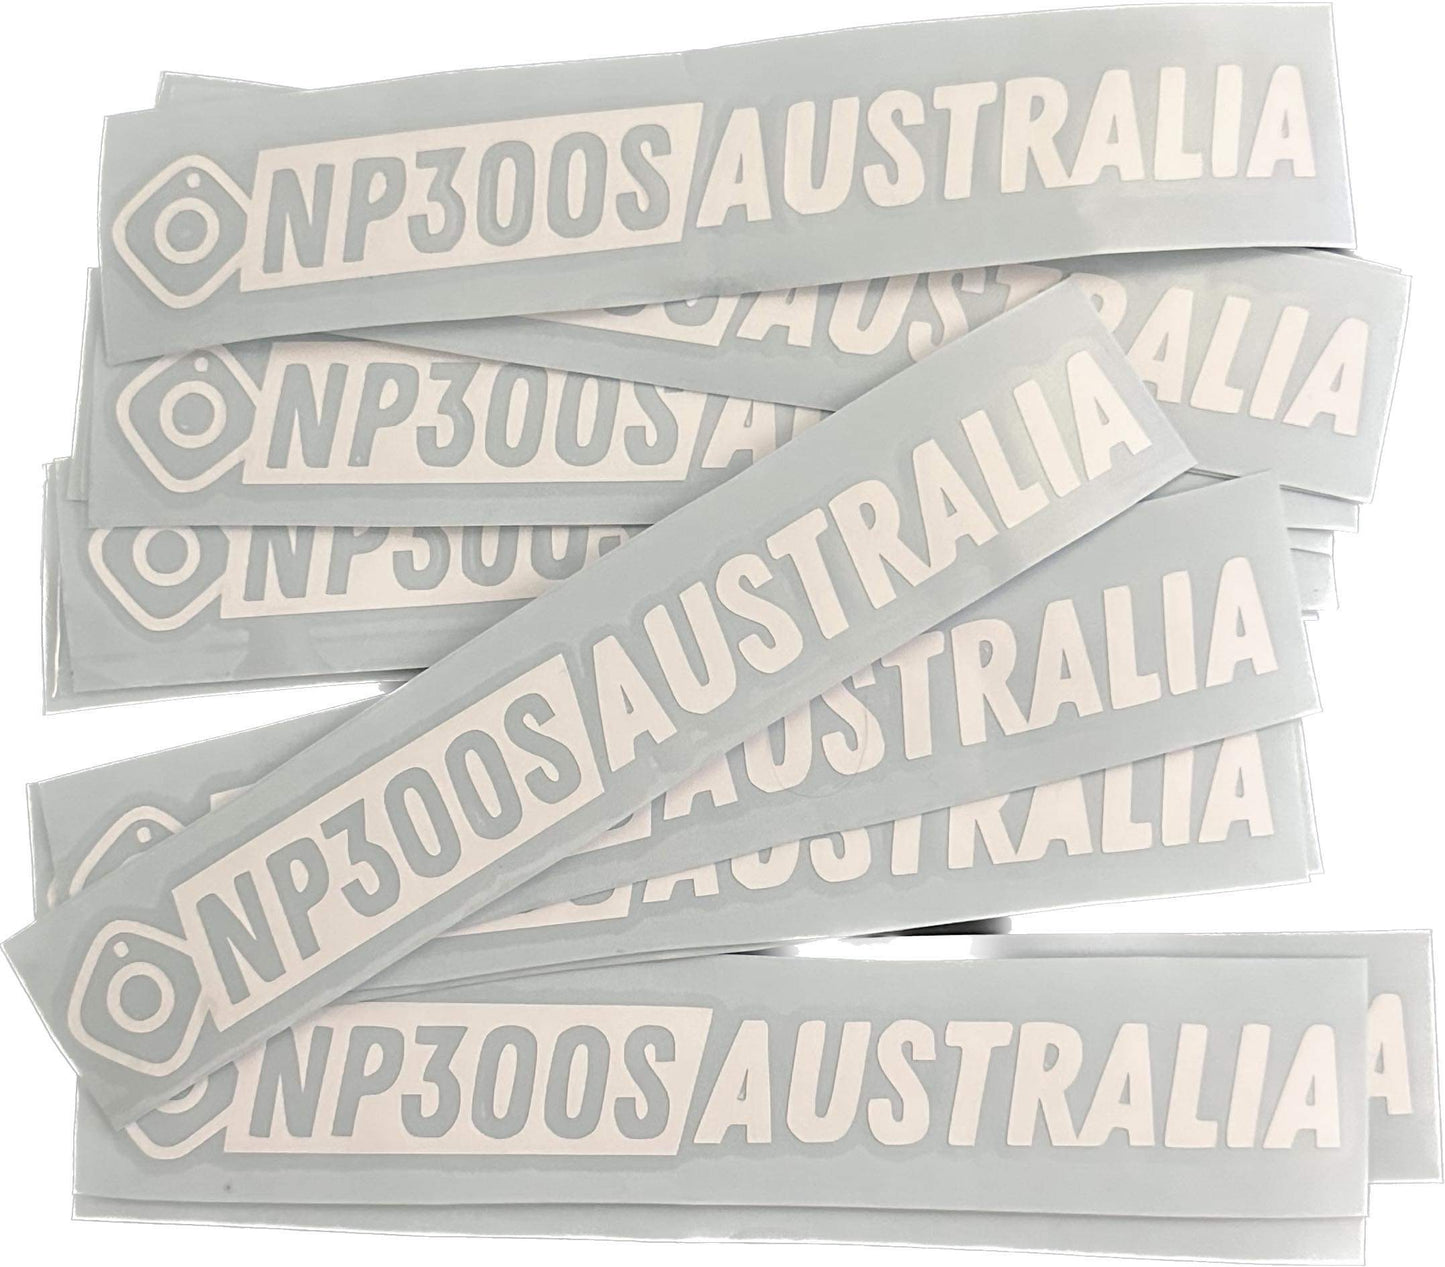 NP300sAustralia Sticker